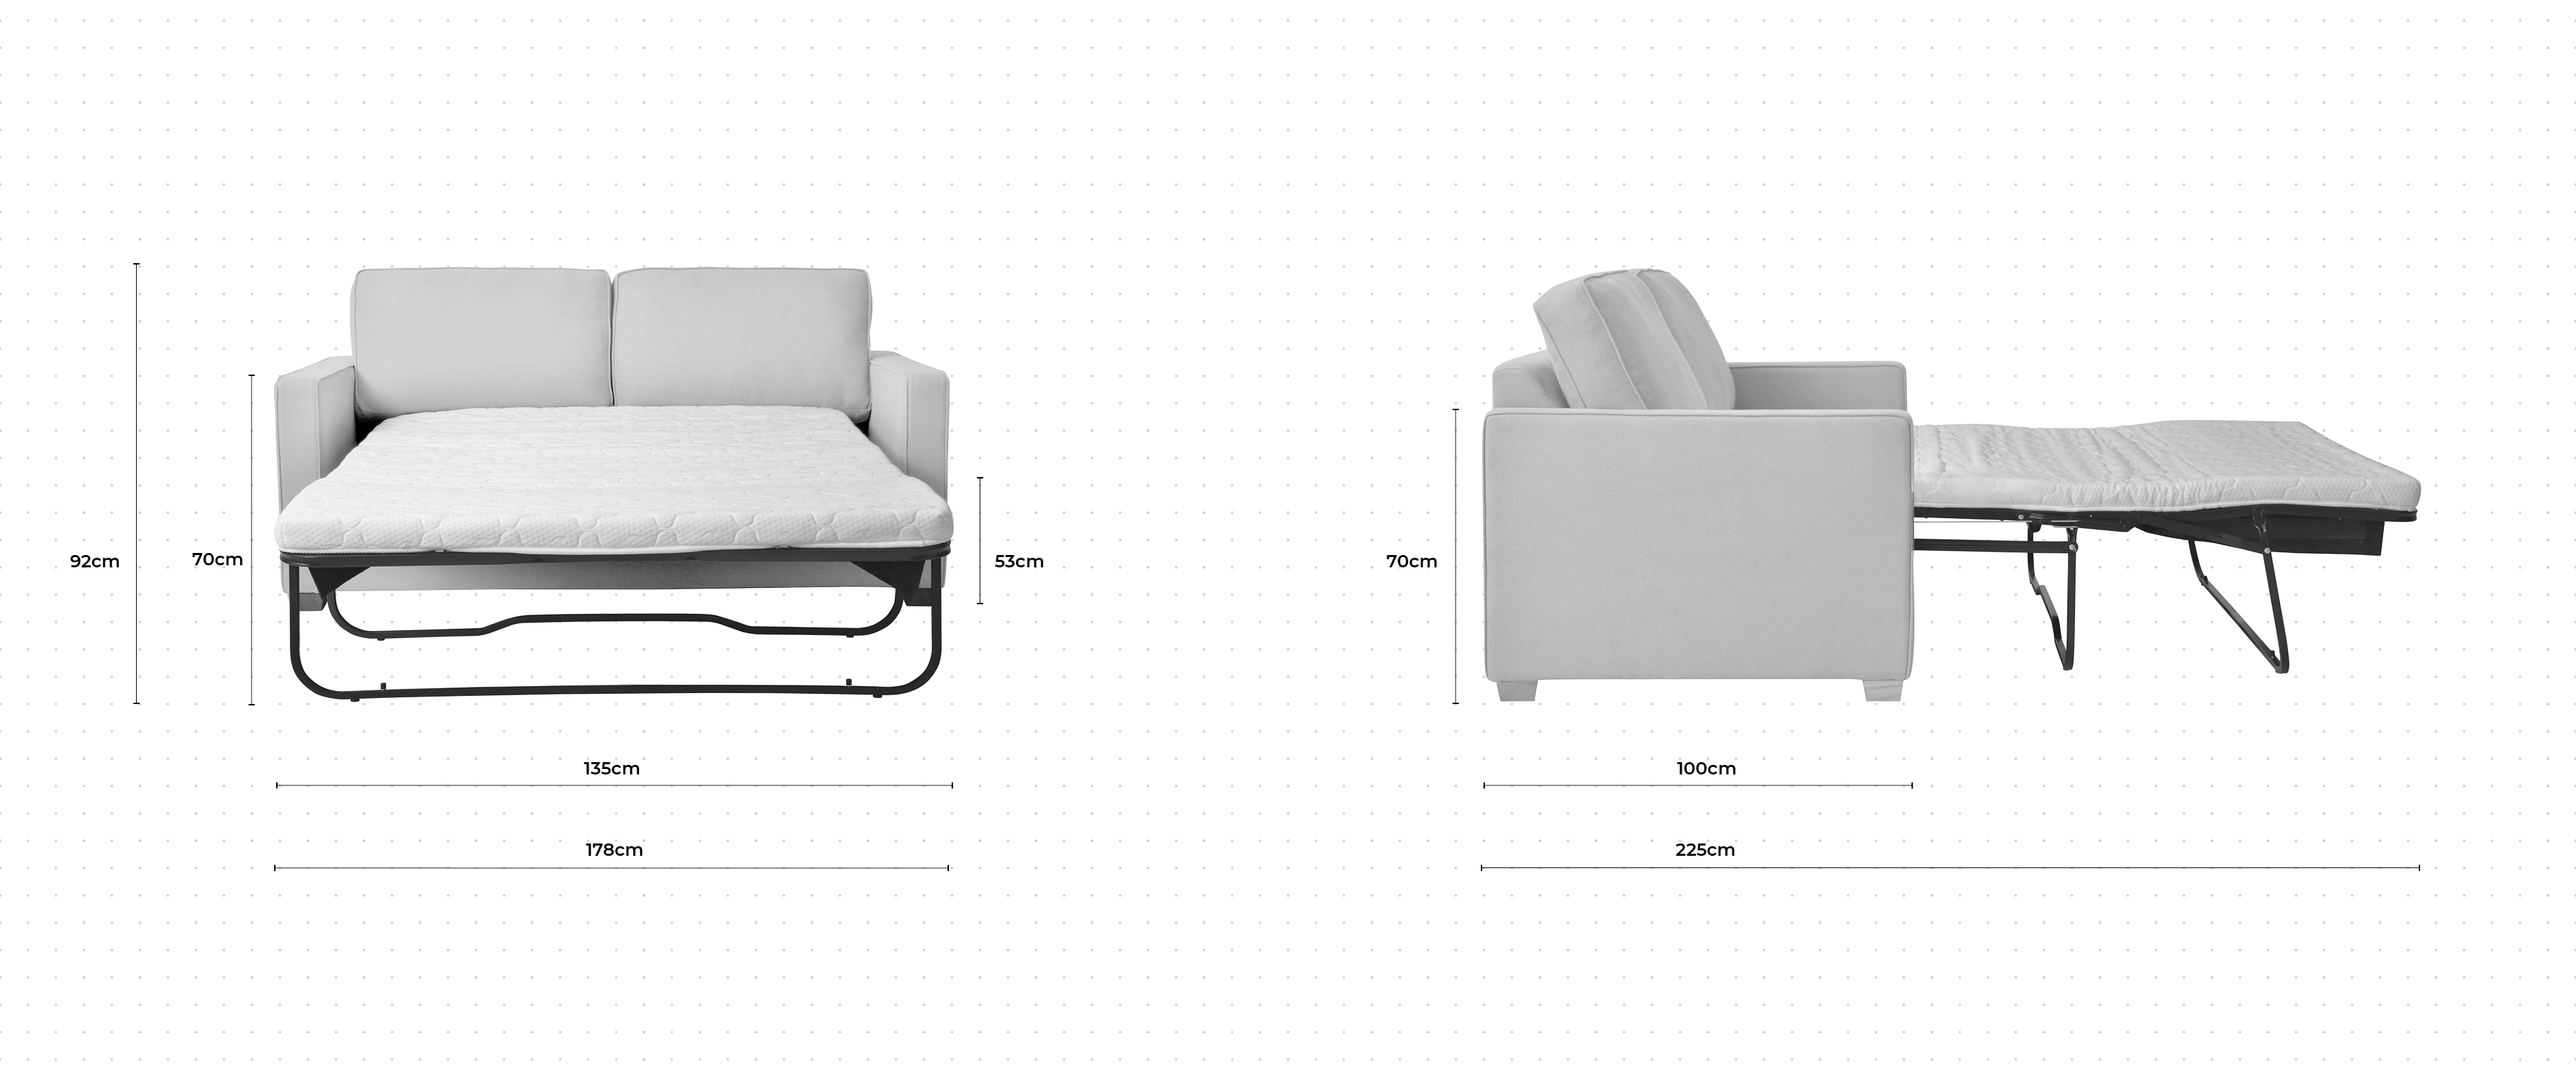 Blake 2 Seater Sofa Bed dimensions